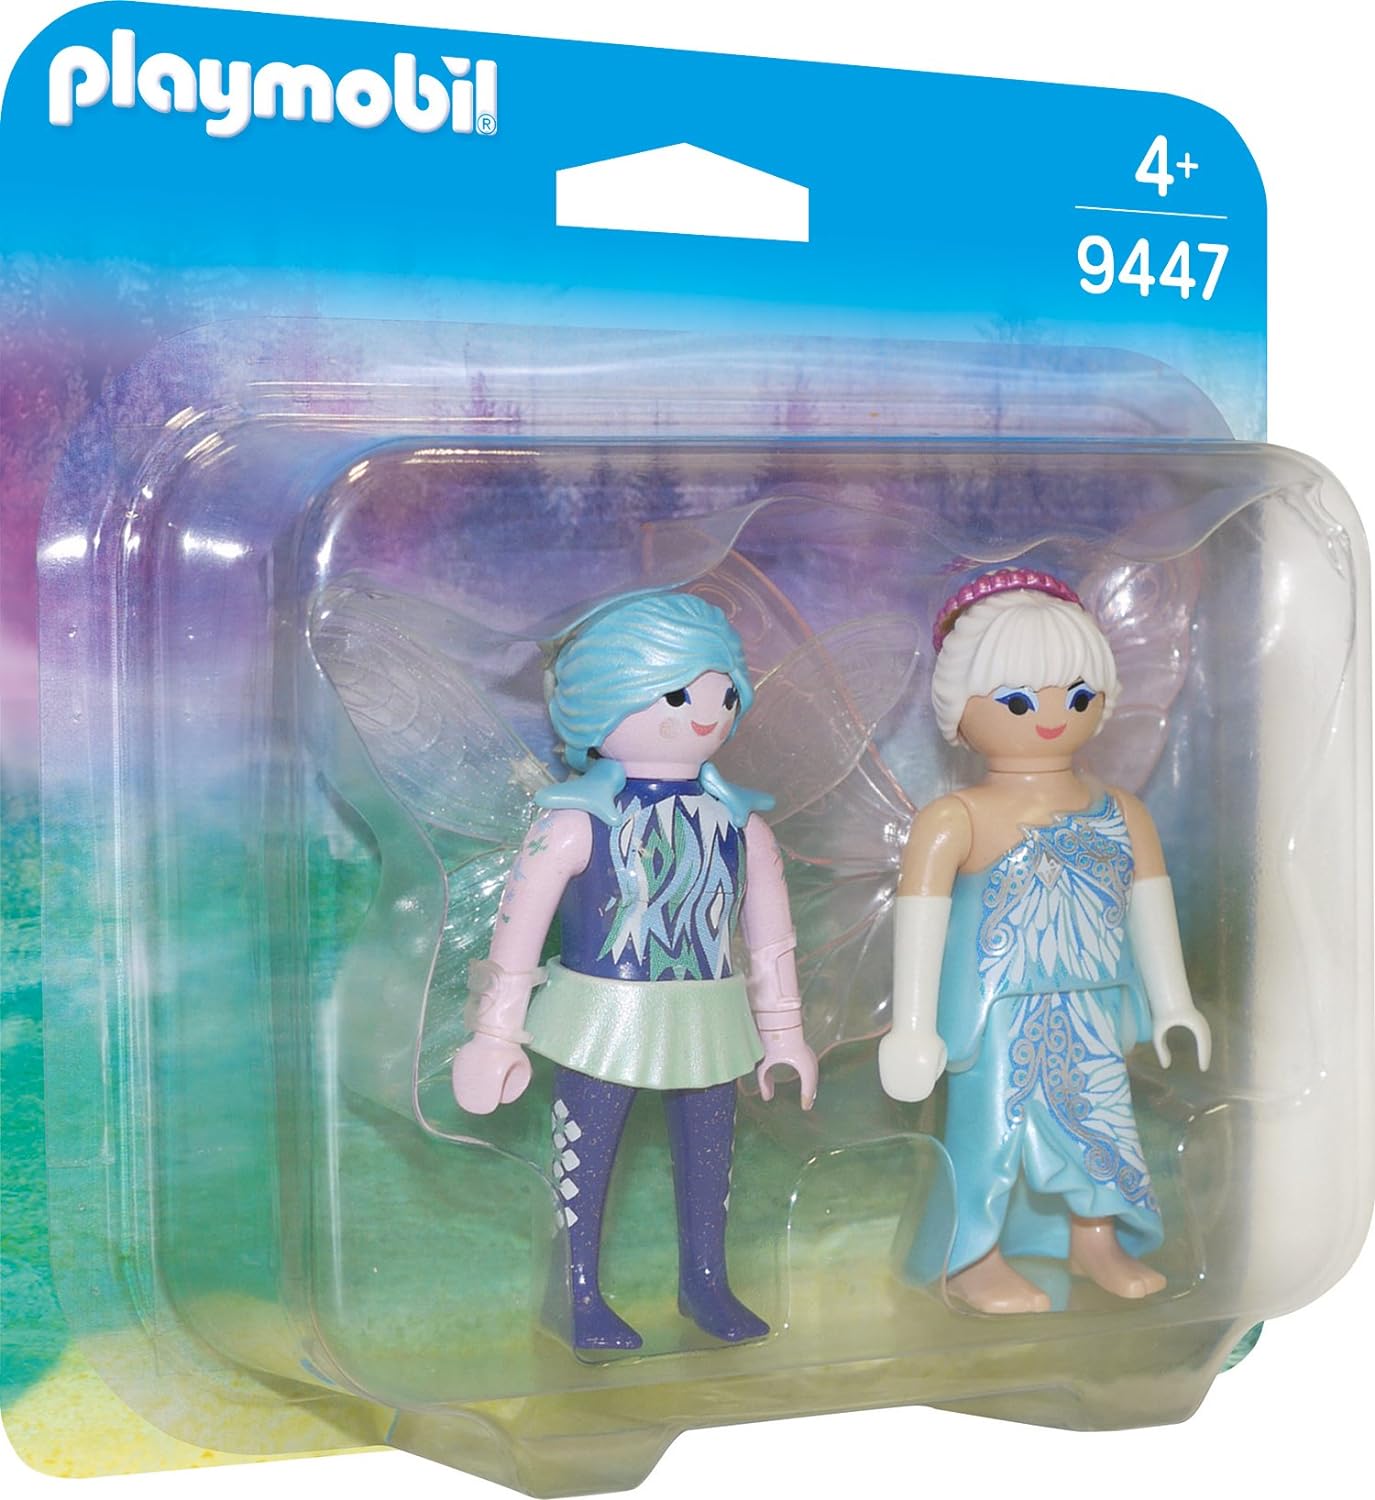 Playmobil 9447 Duo Pack Winterfeen Spiel  PLAYMOBIL®   